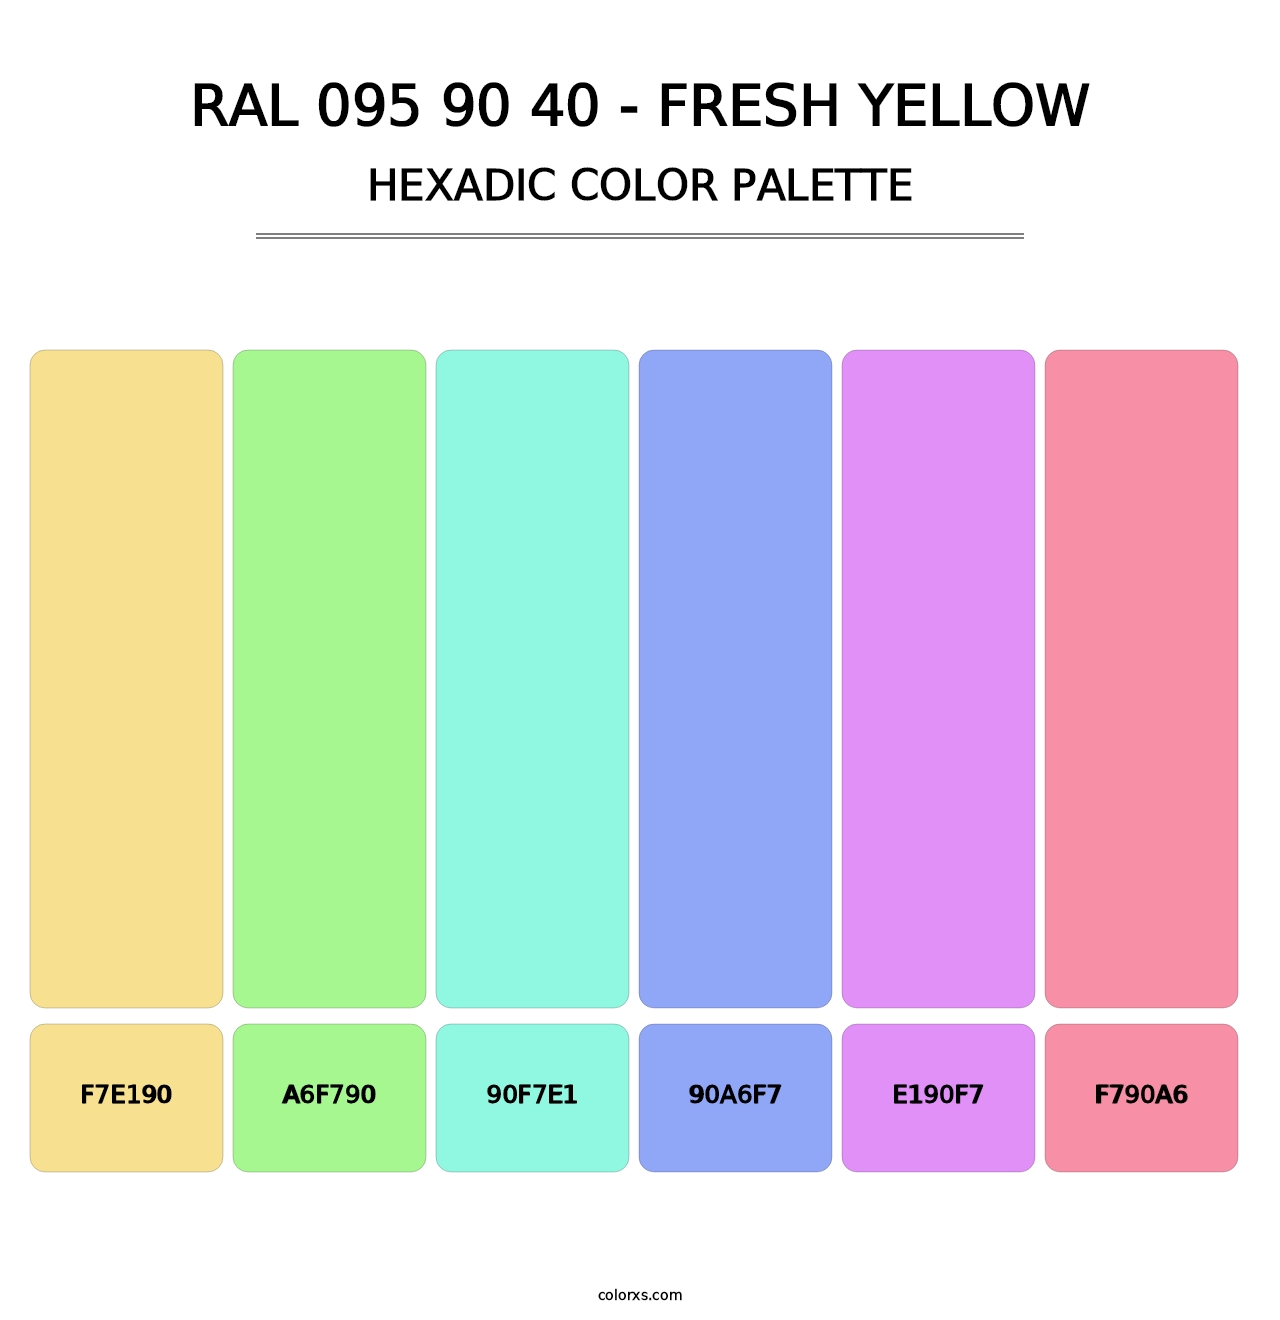 RAL 095 90 40 - Fresh Yellow - Hexadic Color Palette